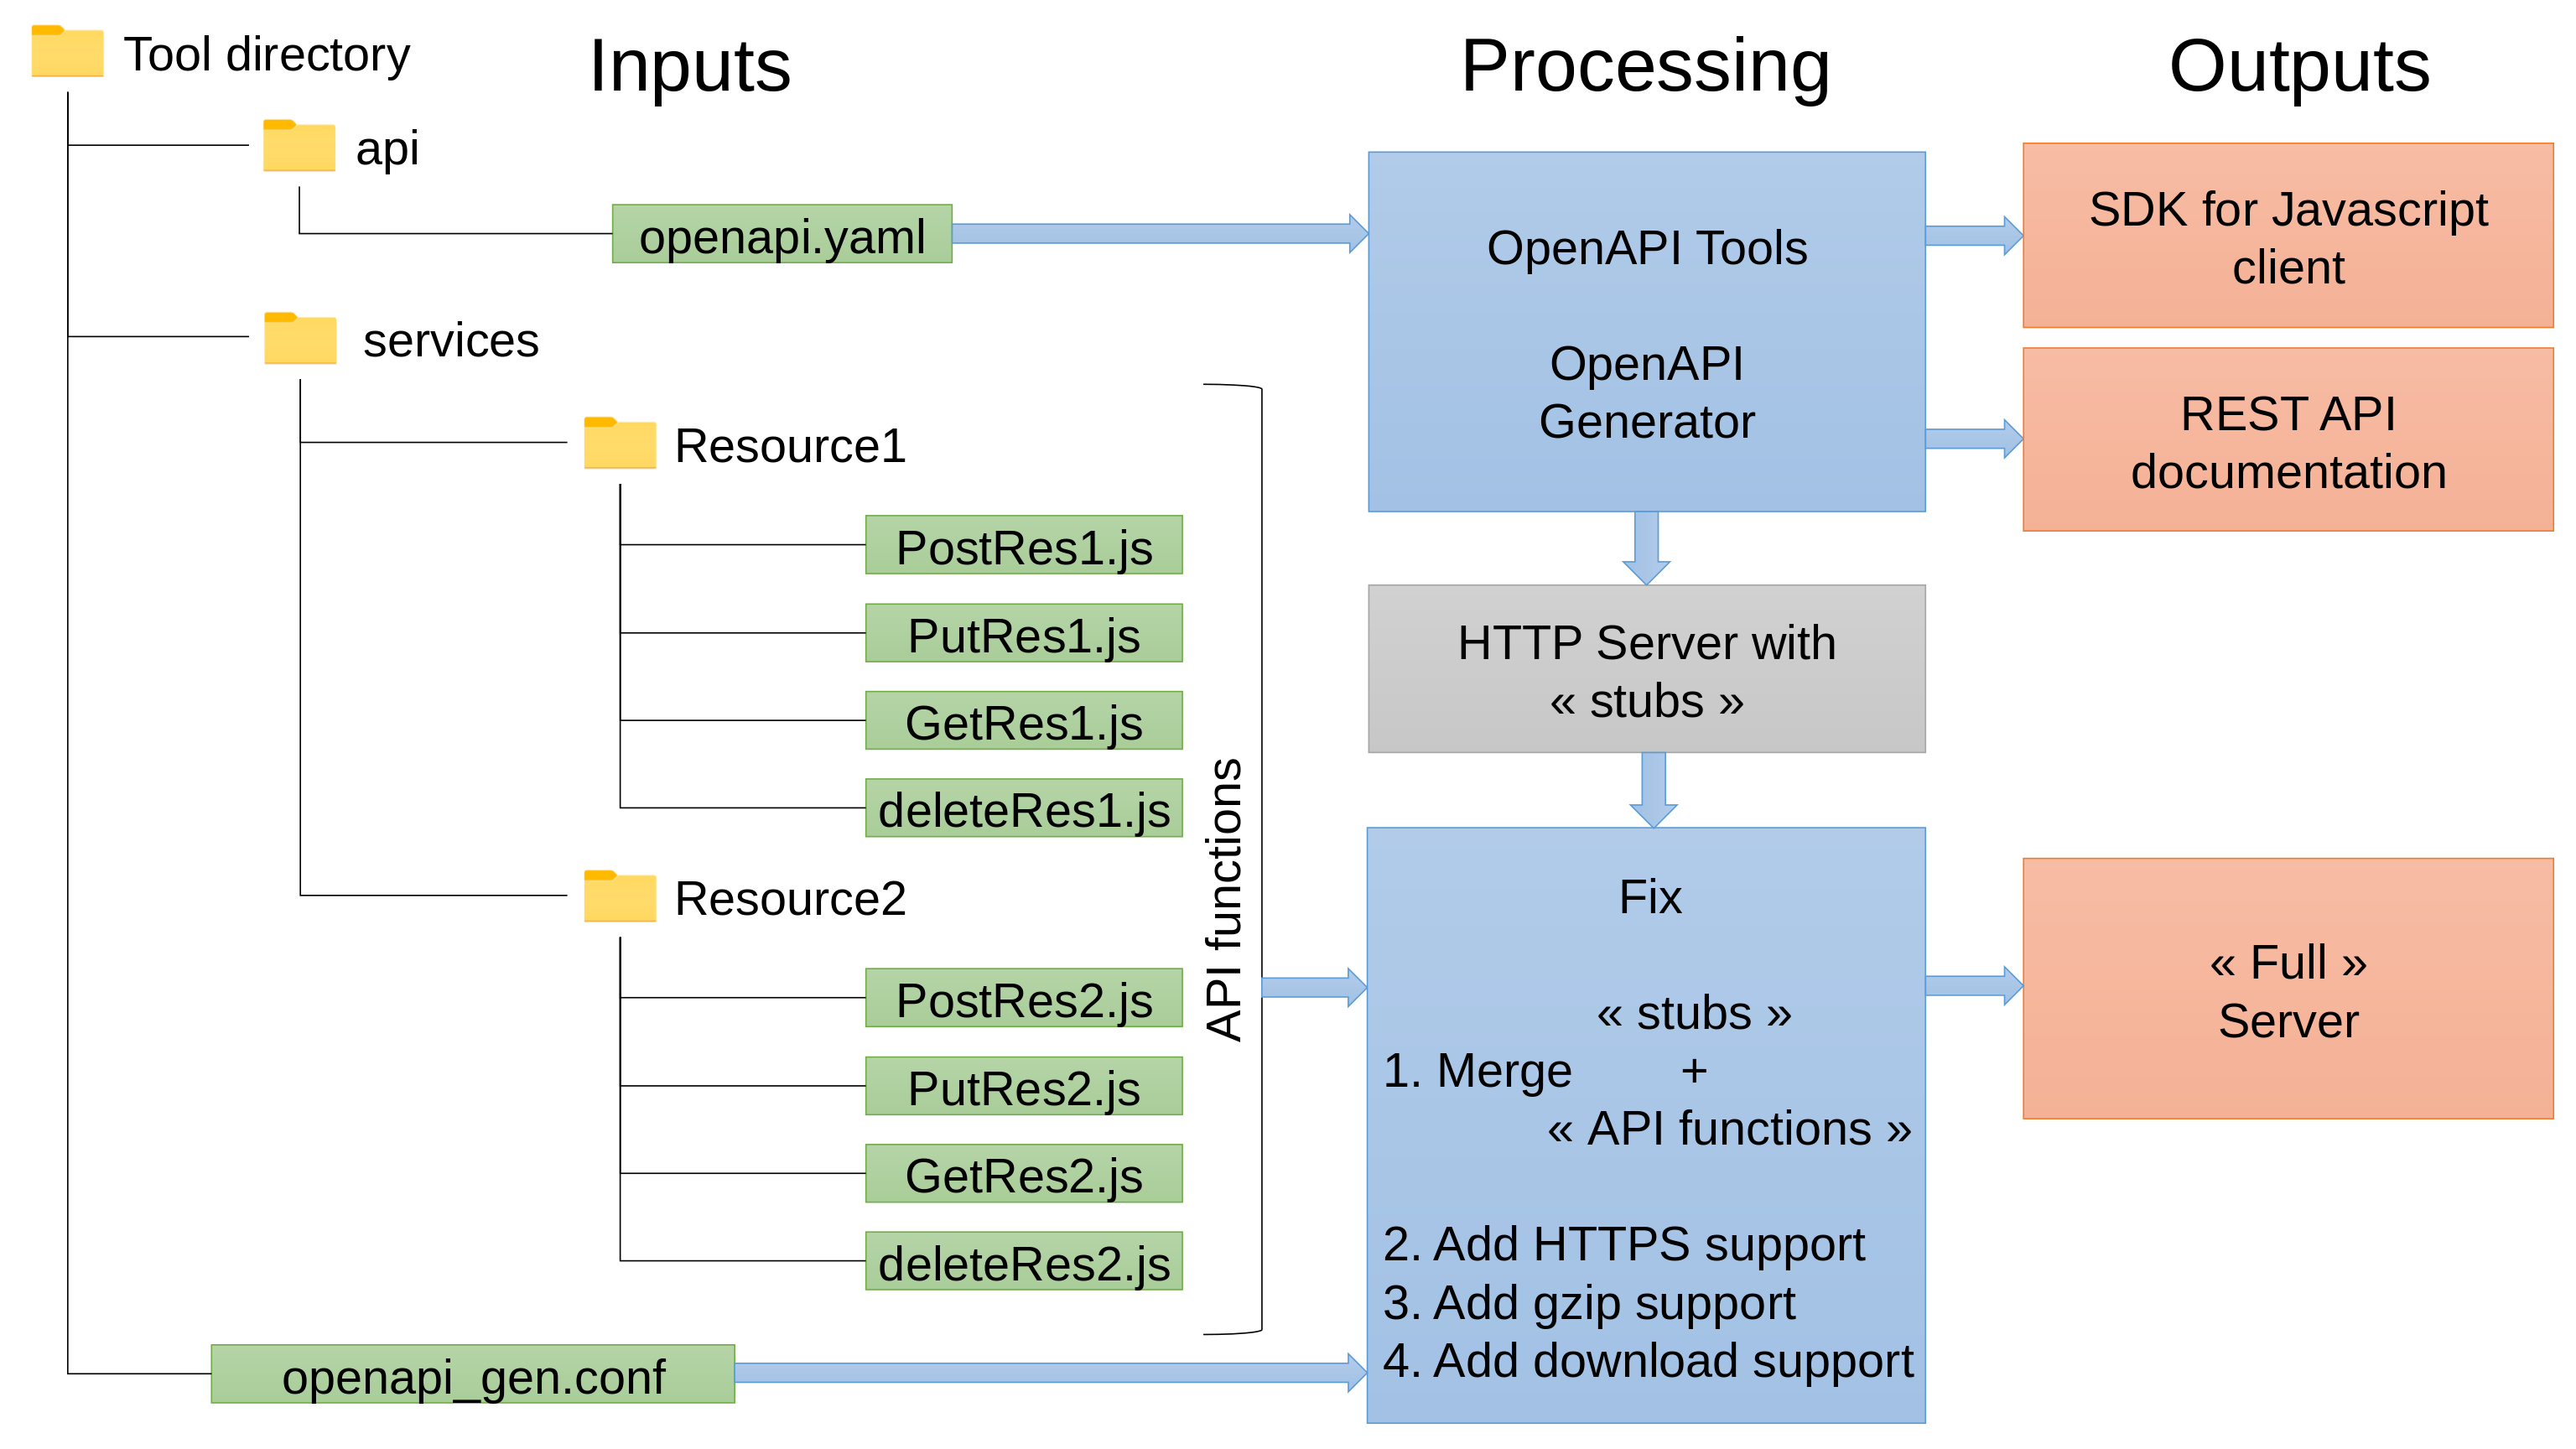 Figure 7: OpenAPI generation flow